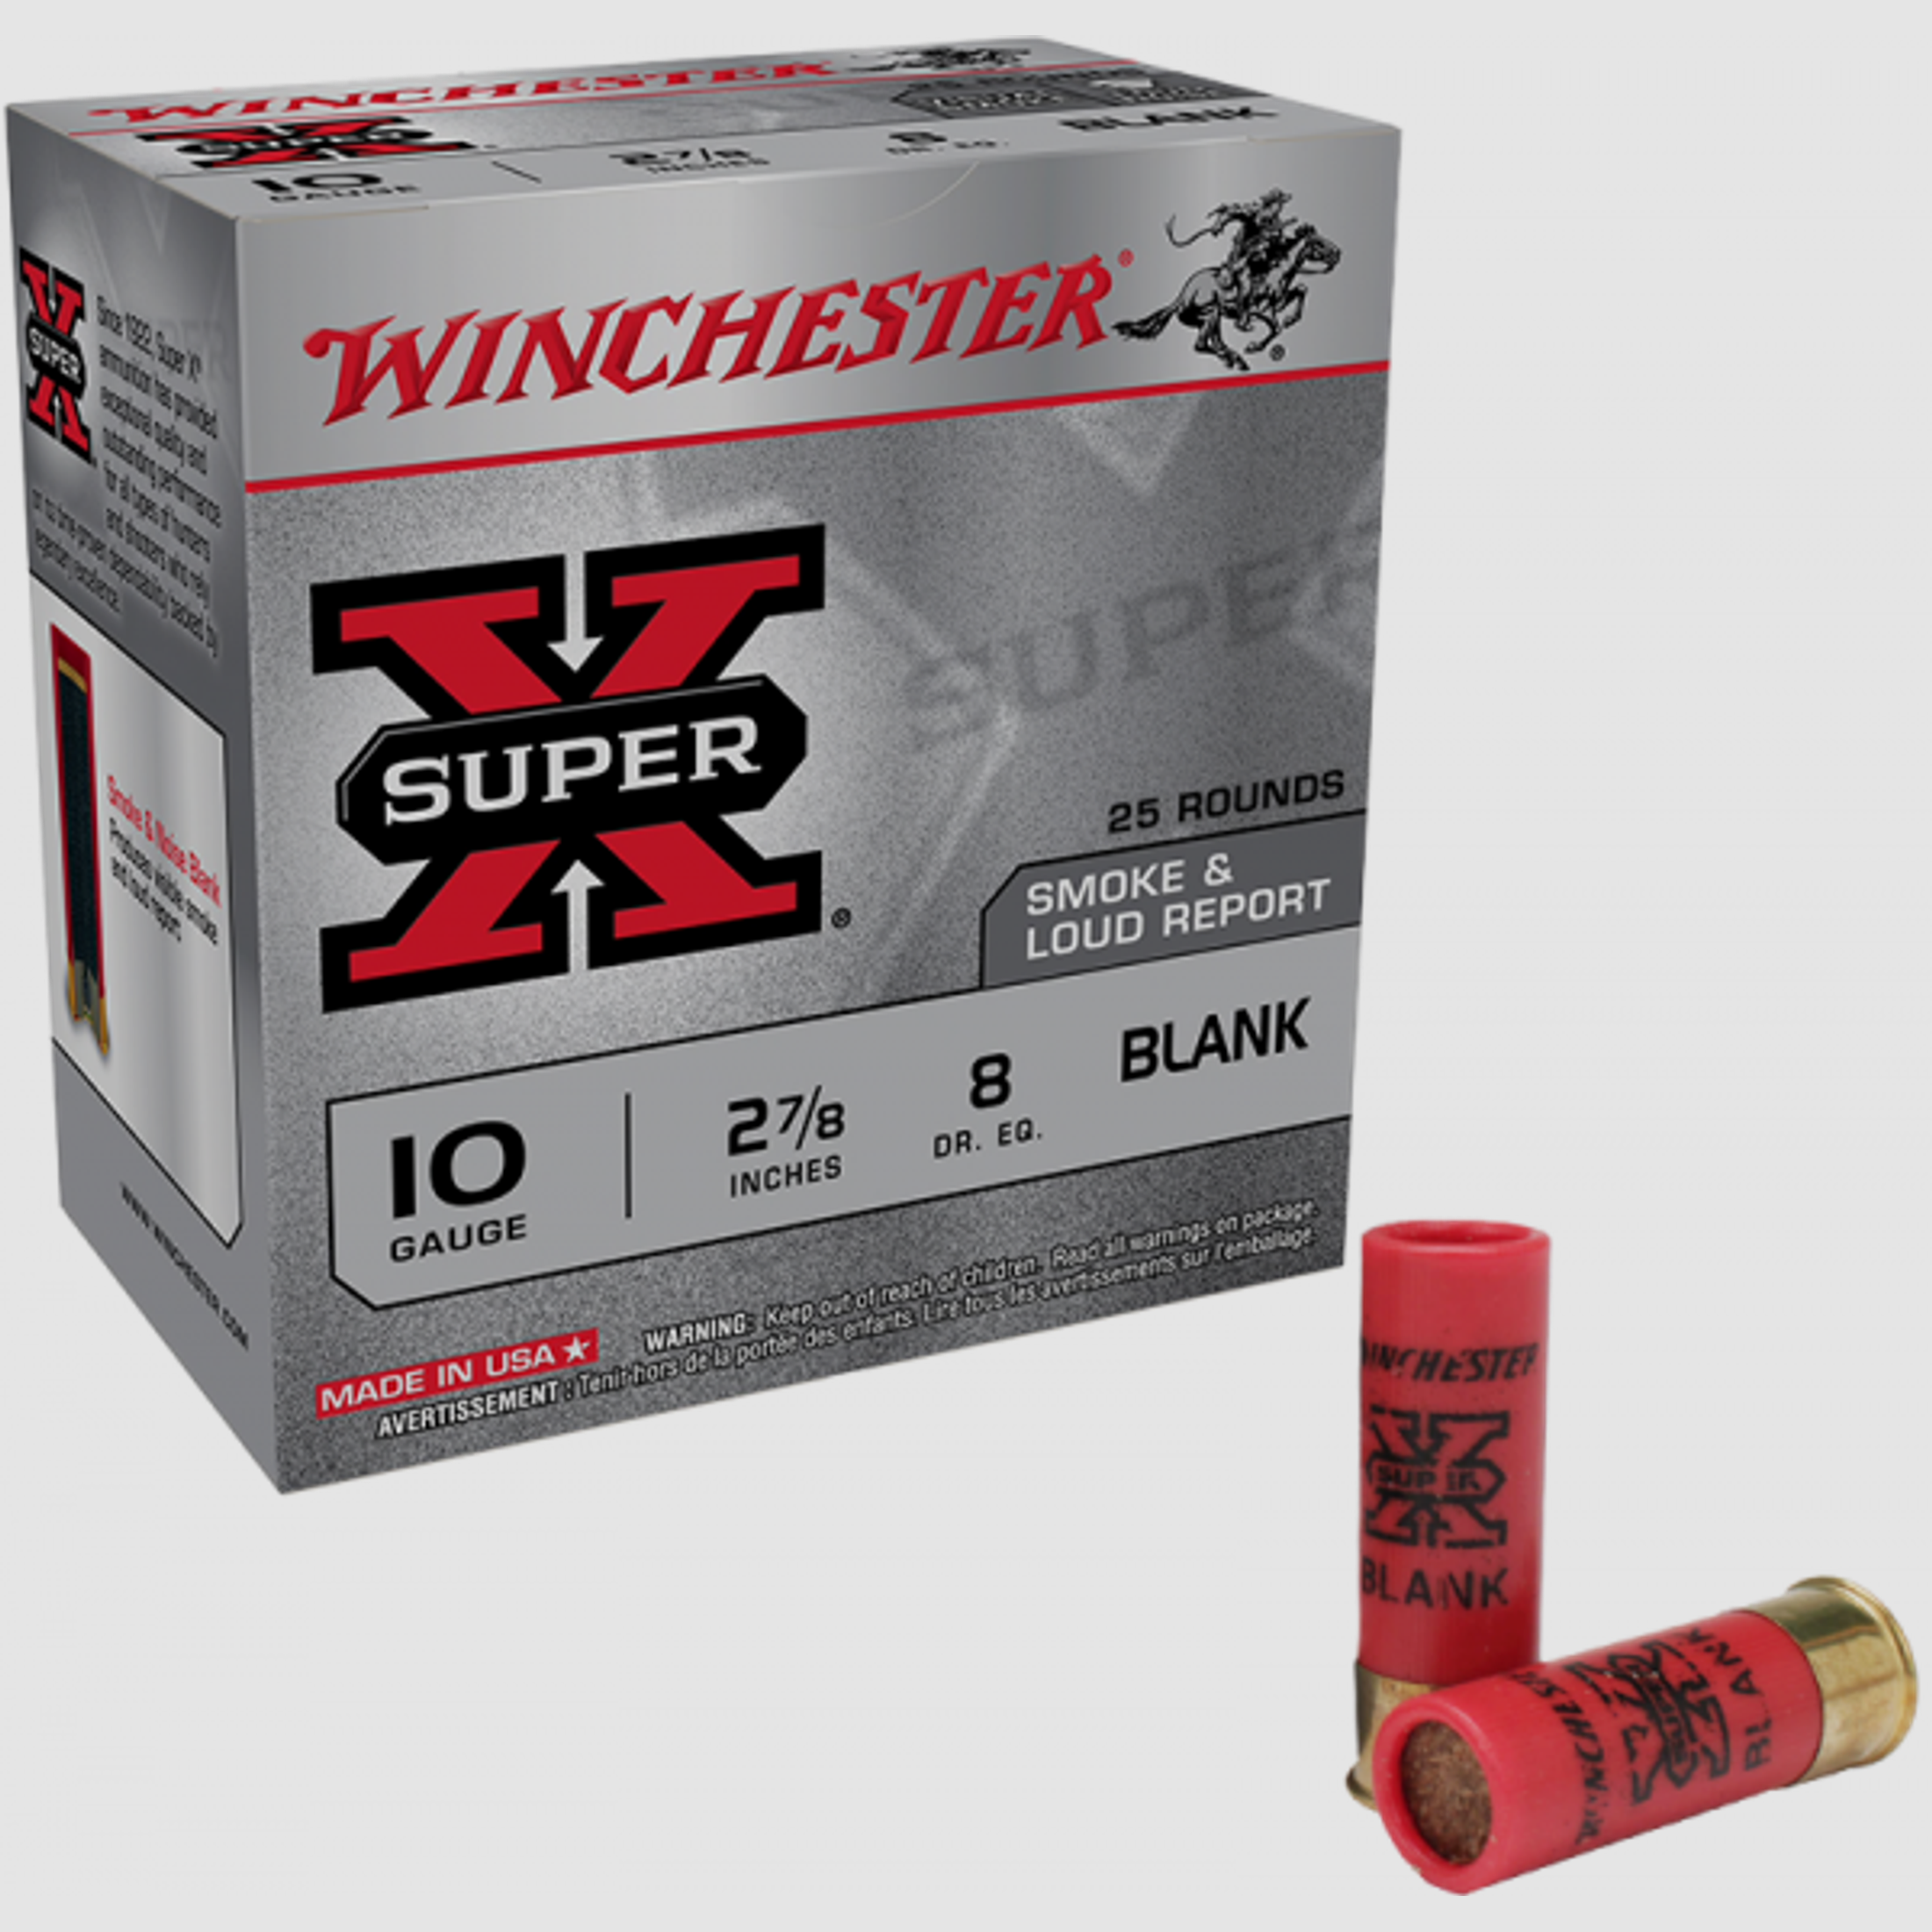 Winchester Super X Blank 10/73 Knallpatronen